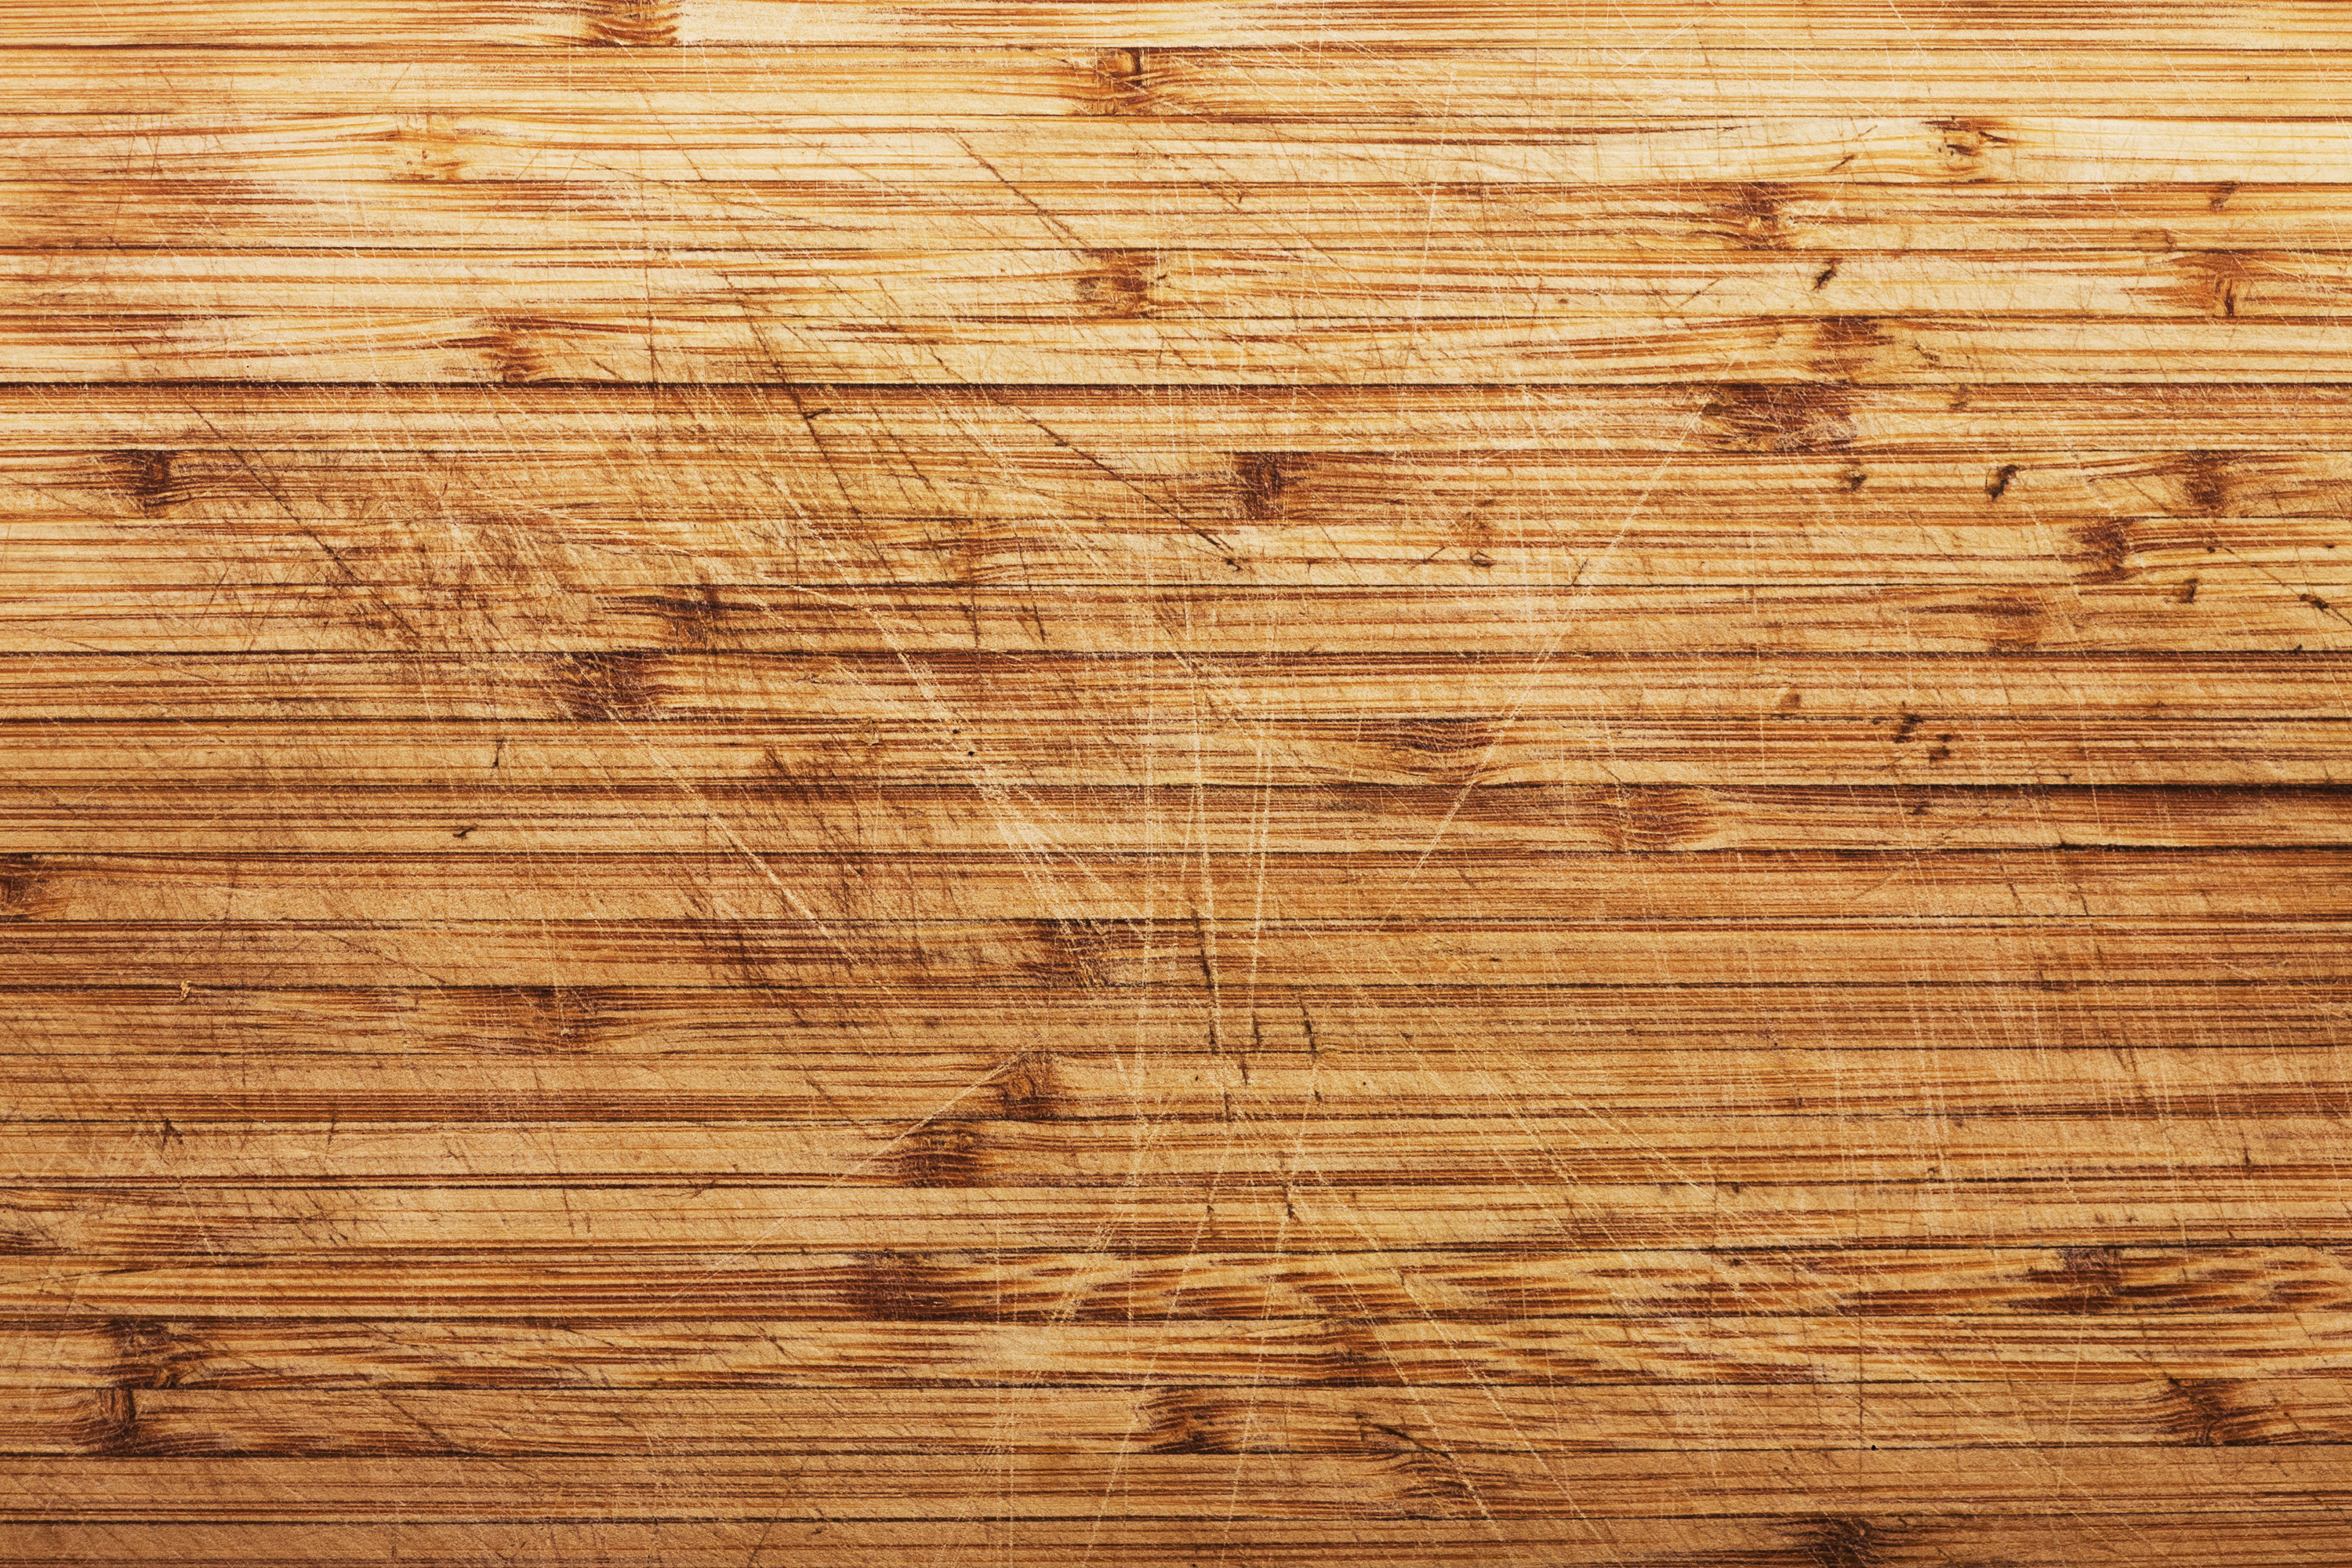 Wooden Chopping Board Texture